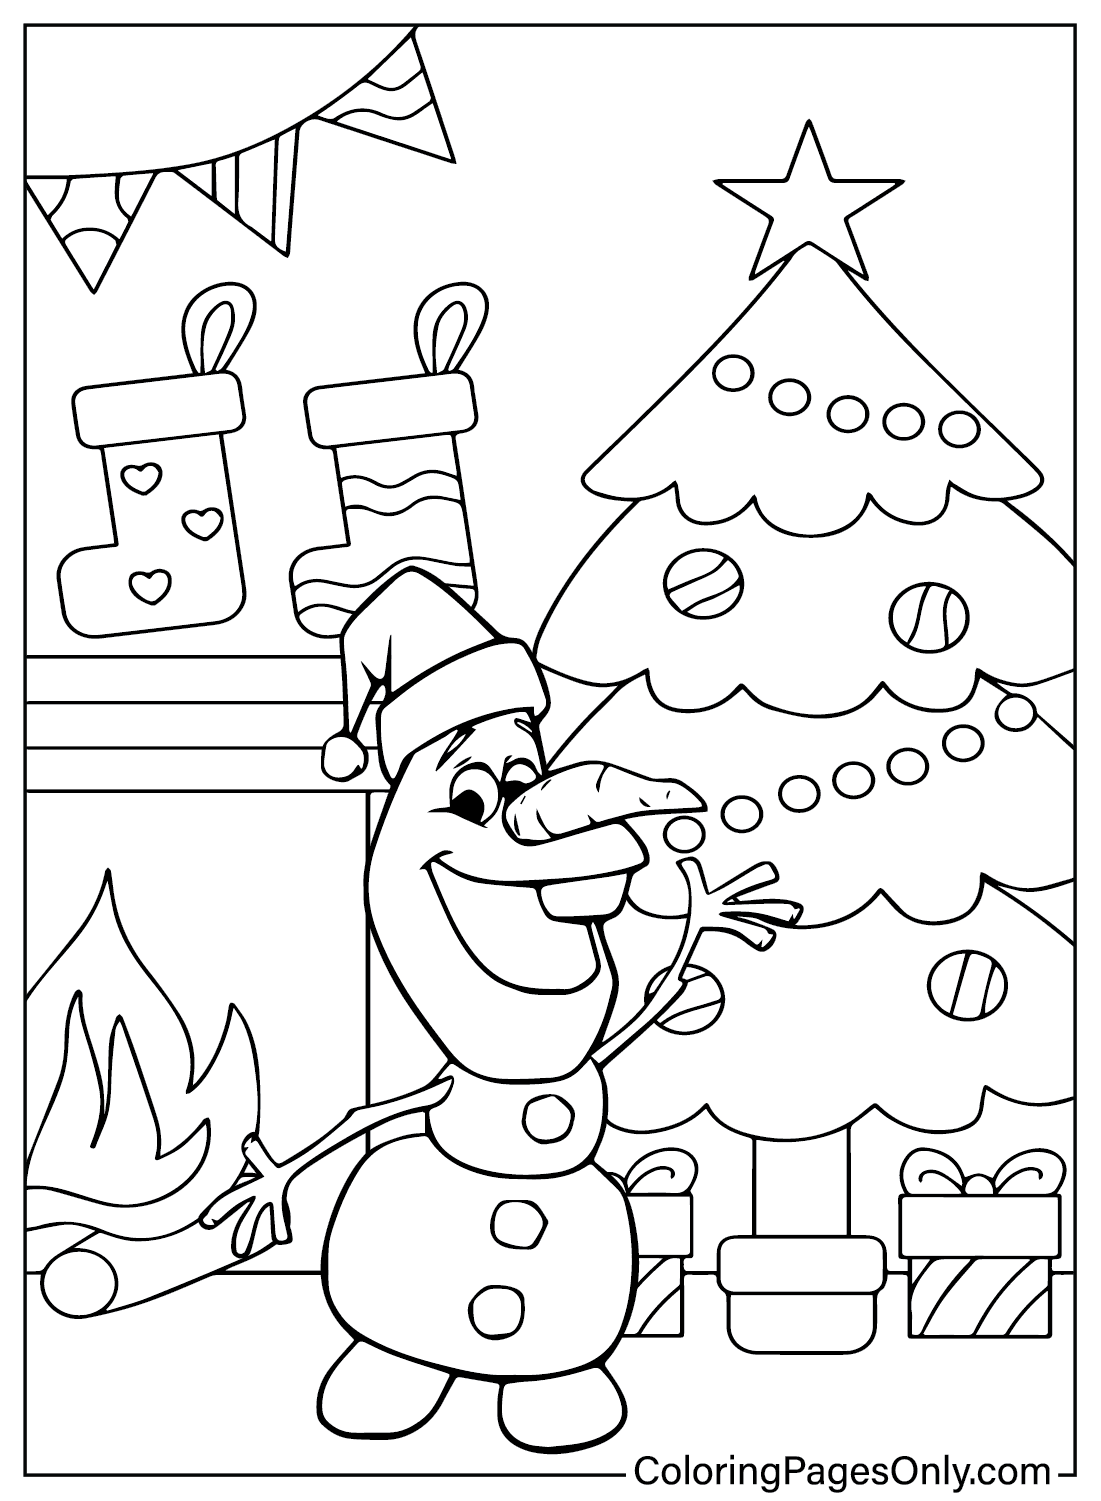 Página para colorir de boneco de neve e árvore de Natal